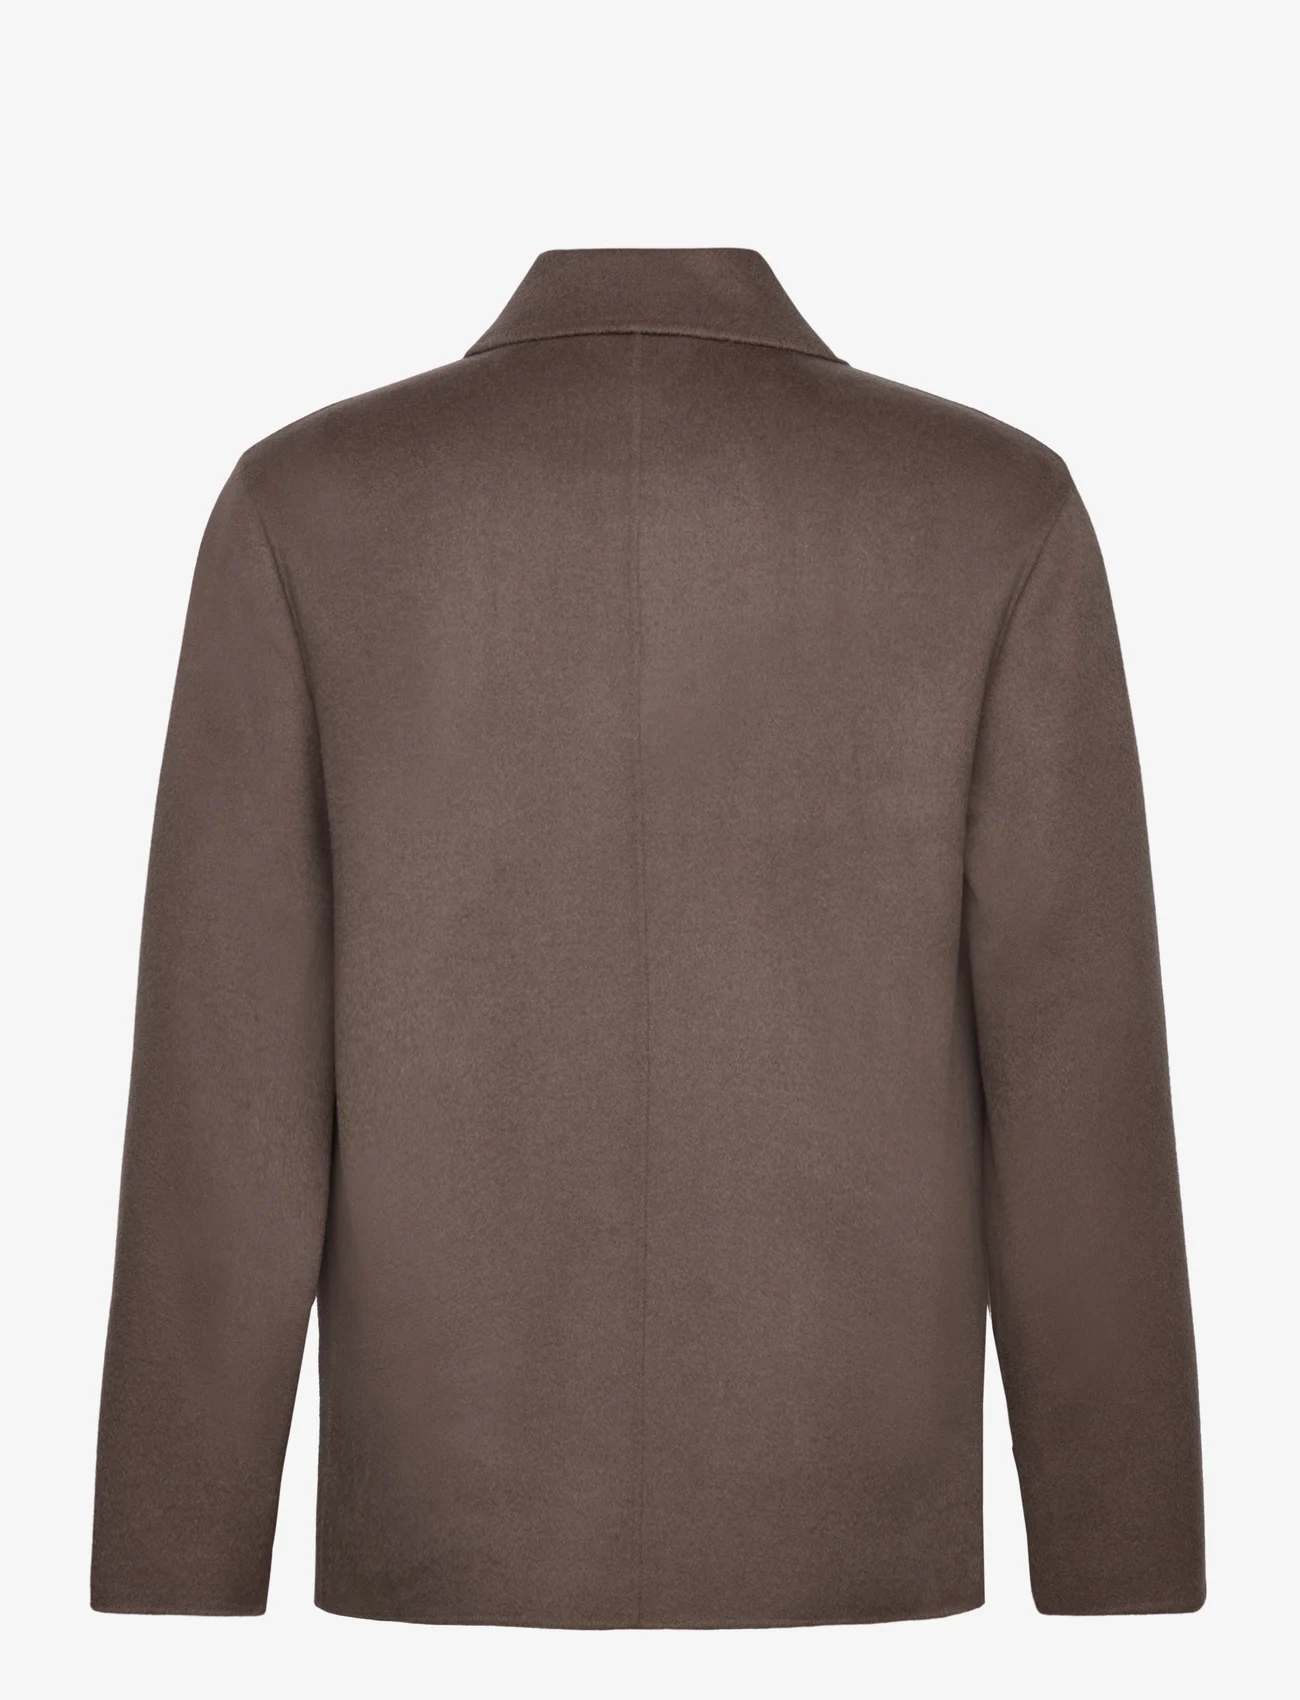 Filippa K - Wool Cashmere Jacket - vestes en laine - dark taupe - 1